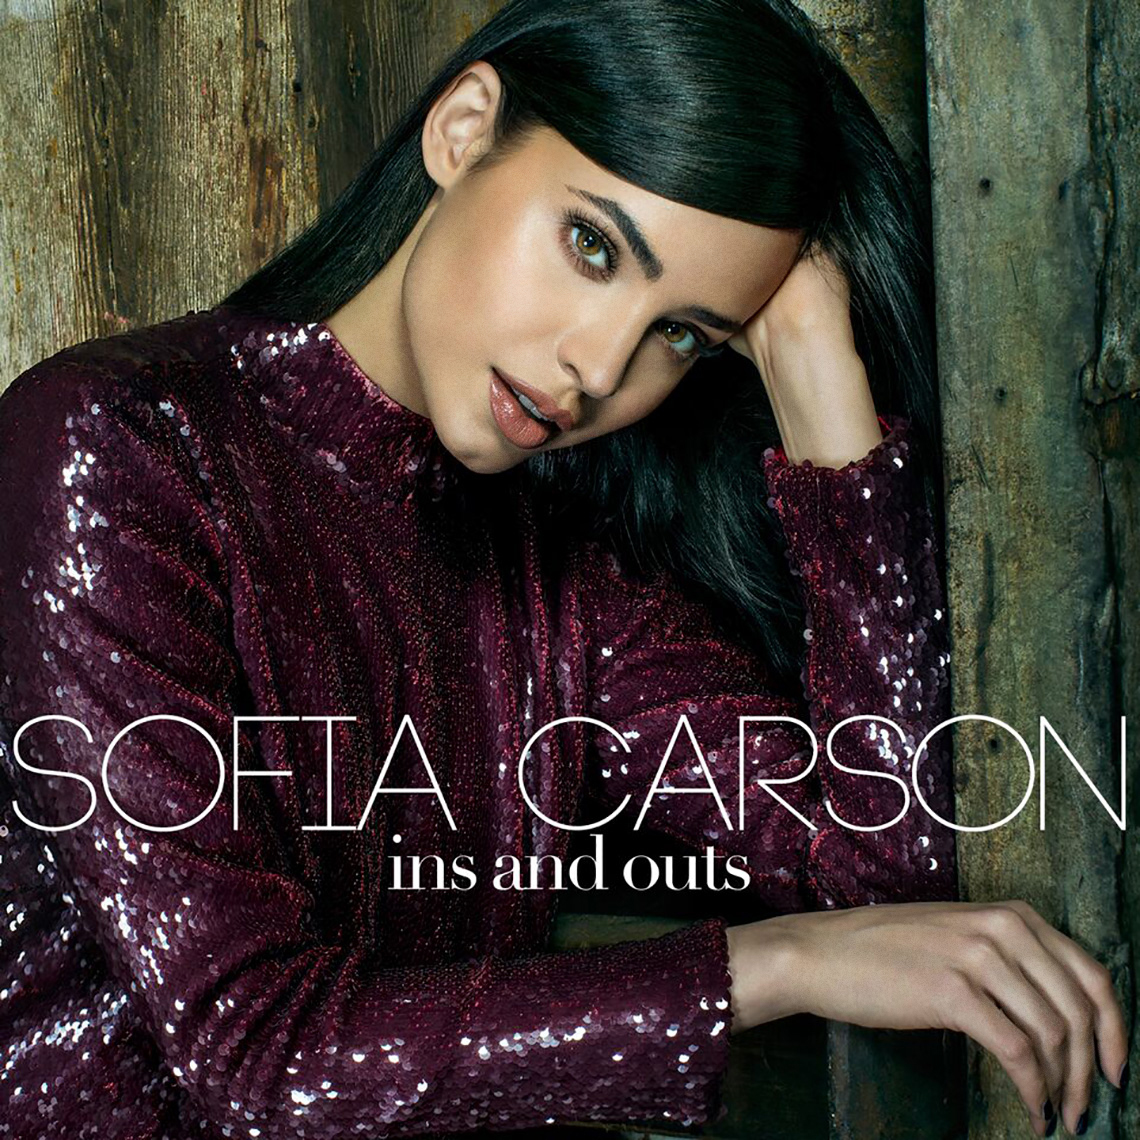 Celebrity Photographer Michael Schwartz: Sofia Carson album cover